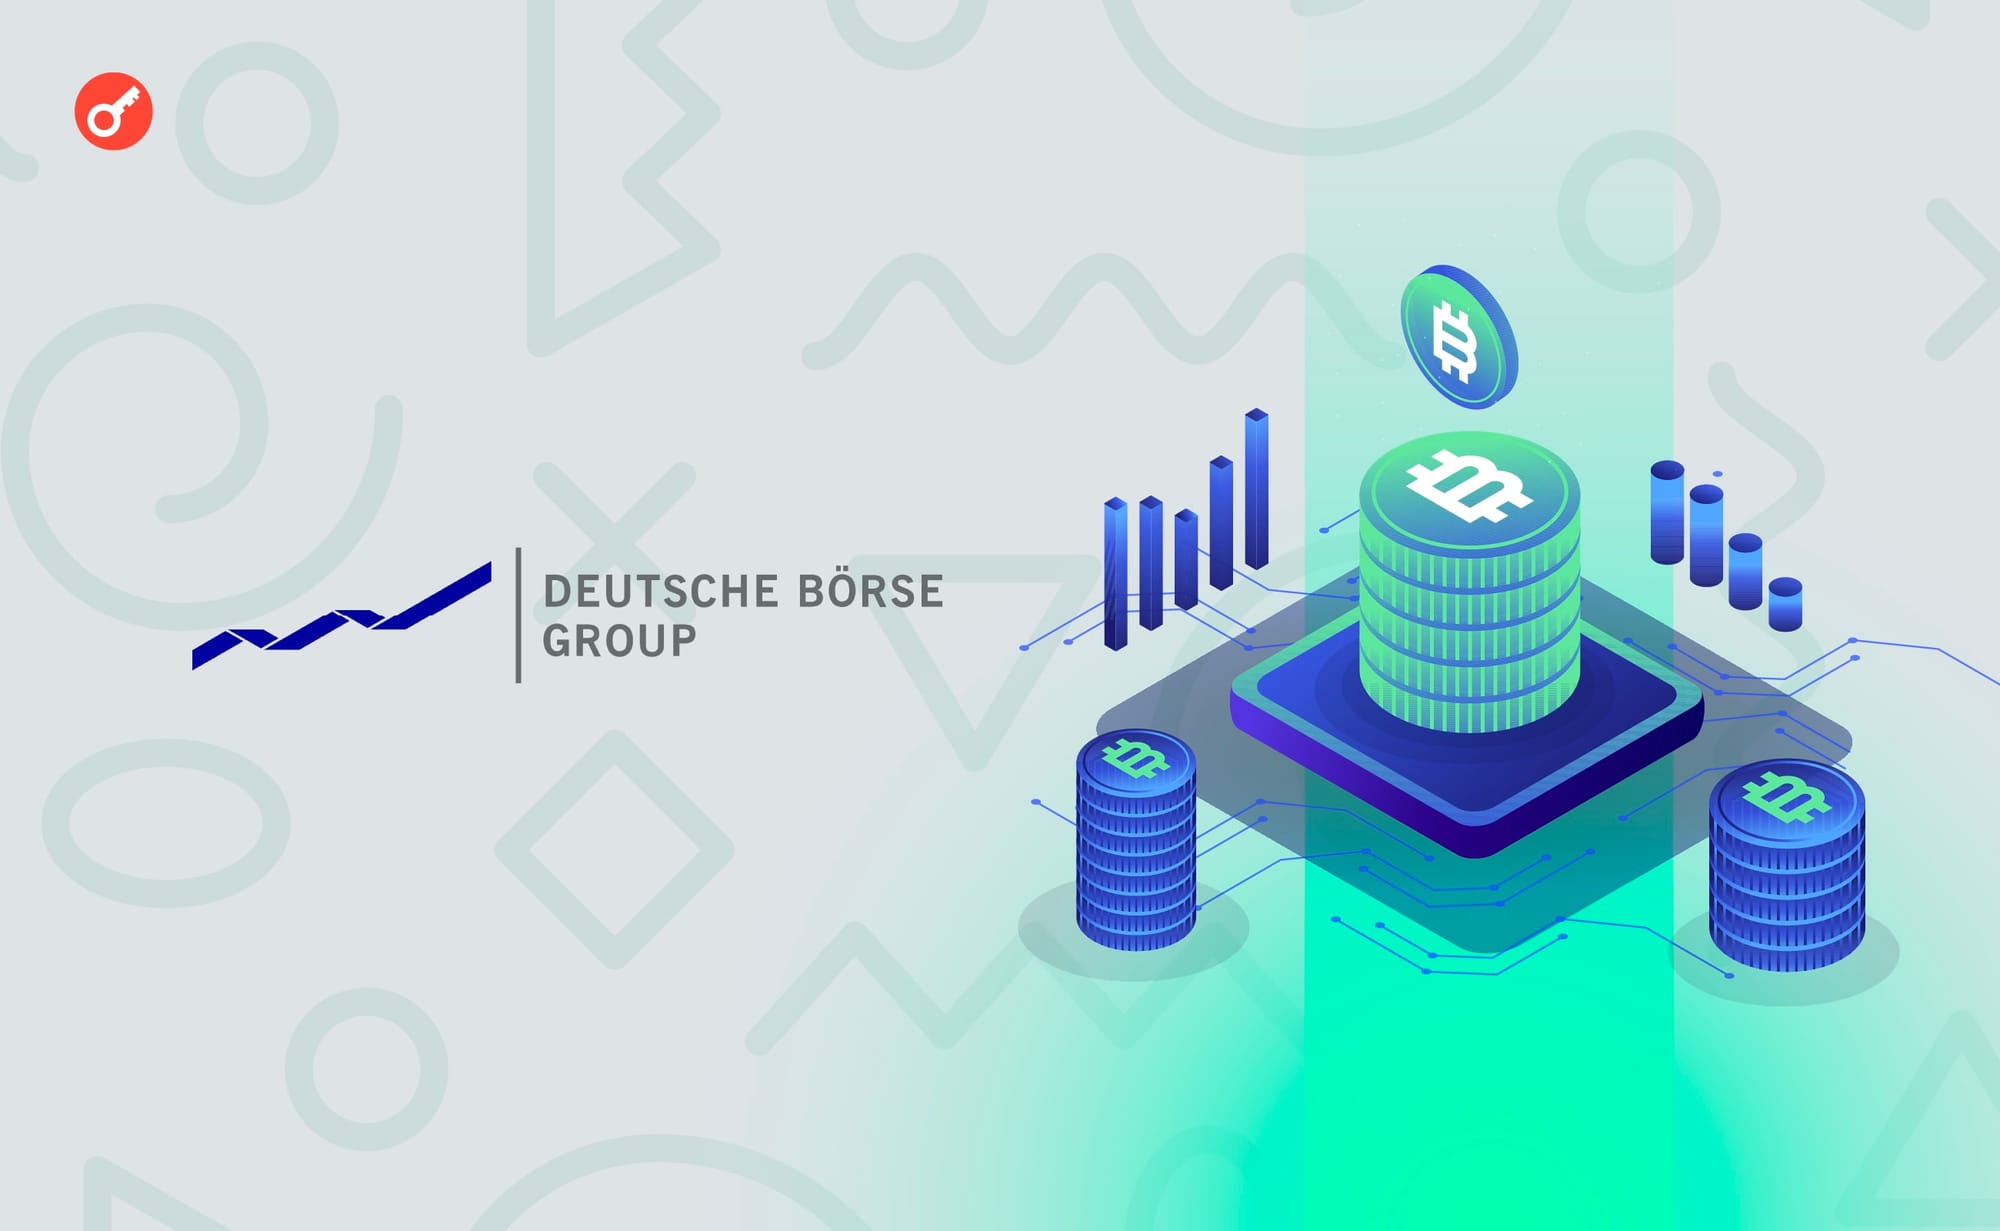 Deutsche Börse запустила платформу для торговли криптовалютами